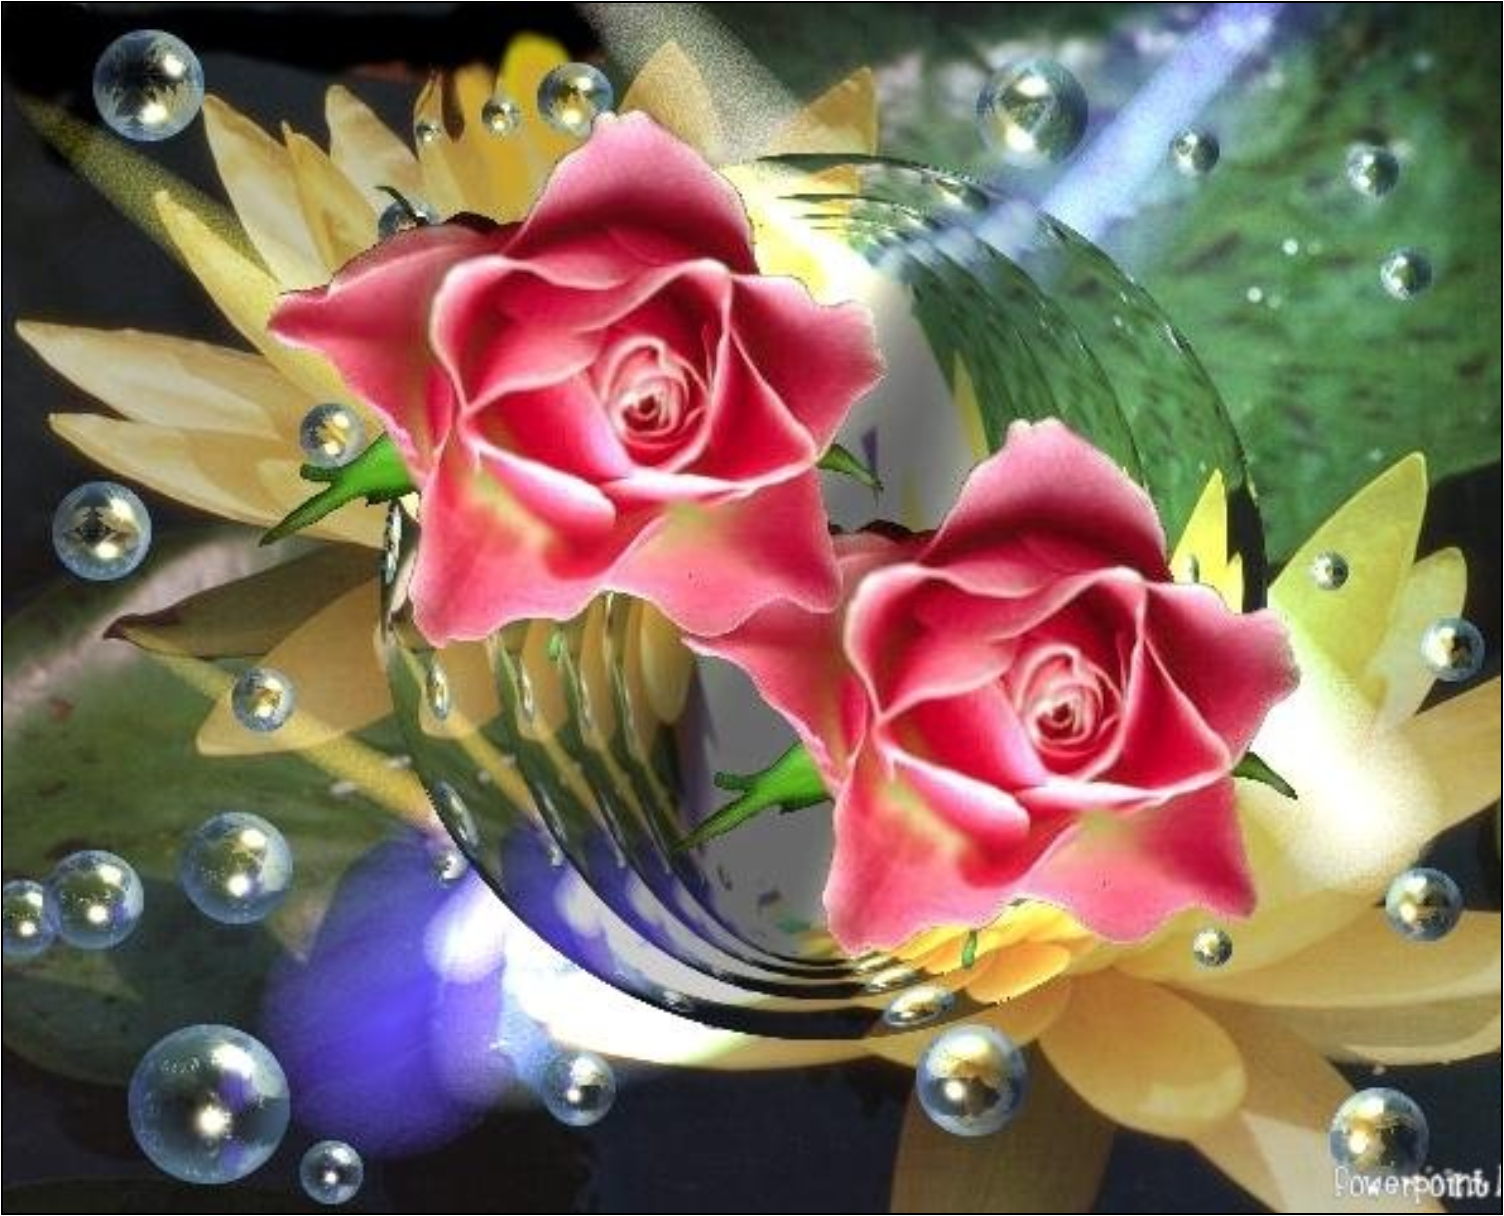 http://www.chezjoeline.com/app/download/9957639595/Jolies+fleurs+..+11+11+2014.pps?t=1415813835